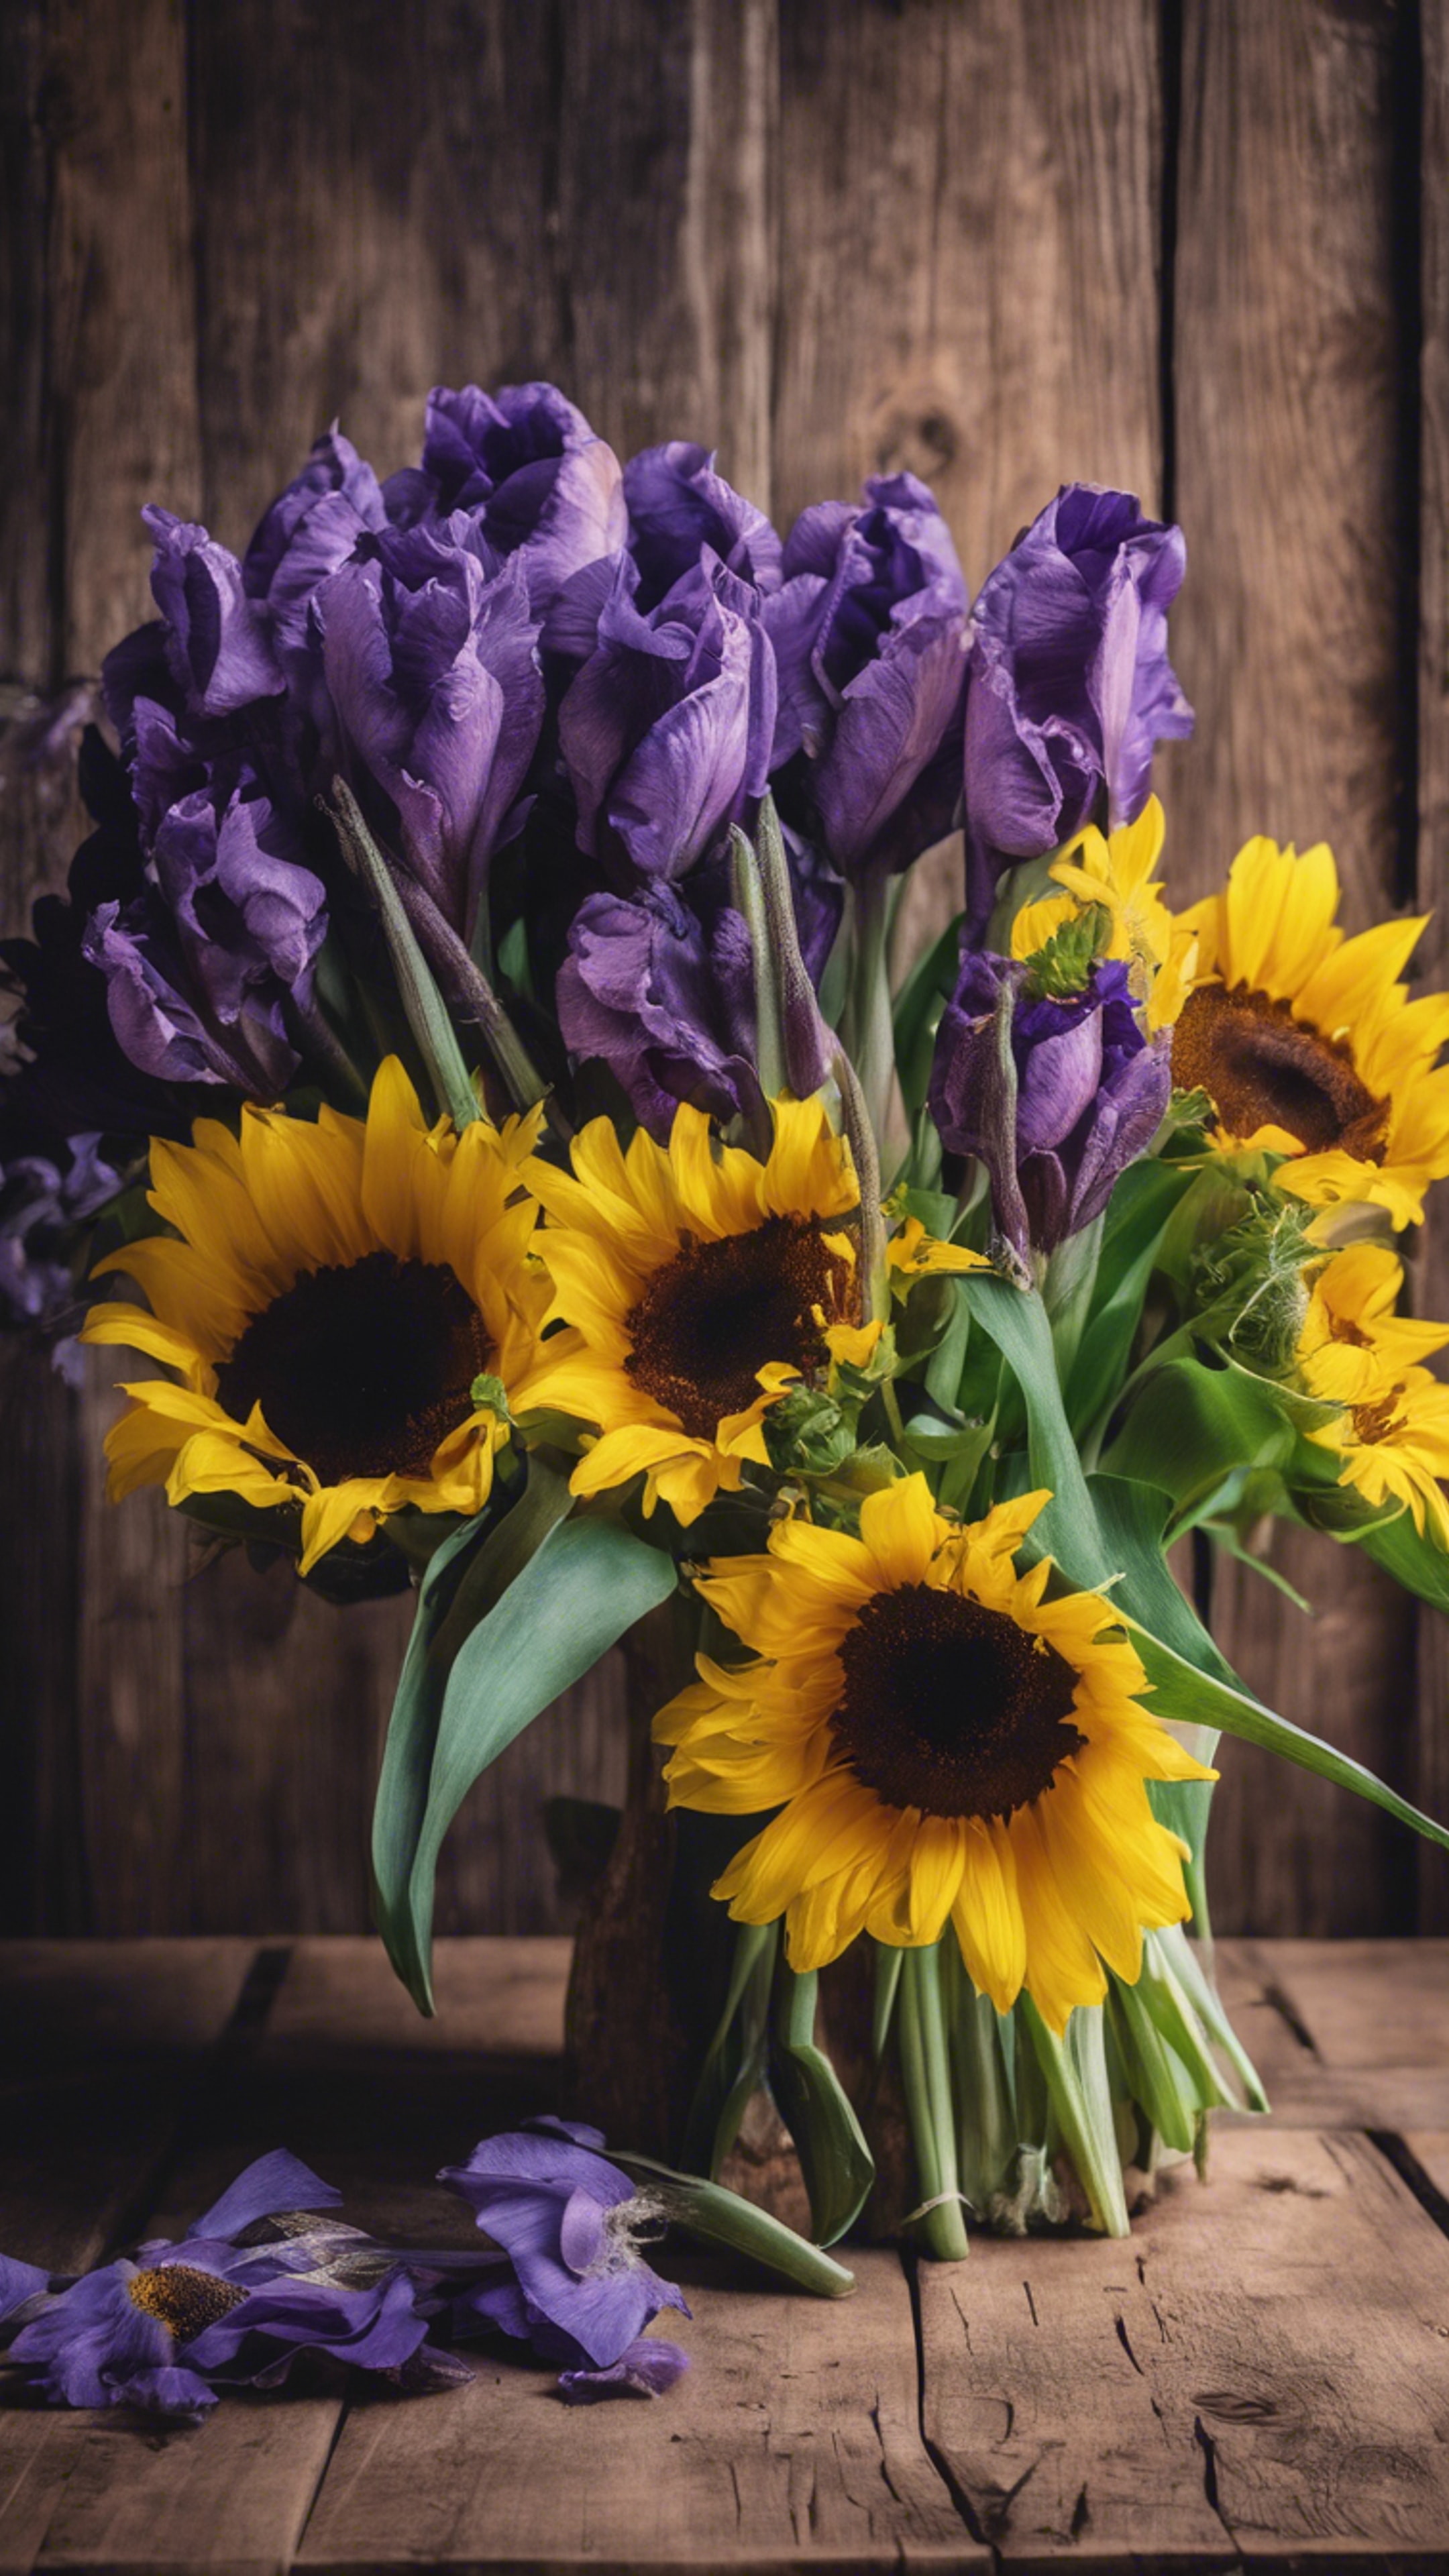 A bouquet of violet irises and bright yellow sunflowers sitting on a rustic wooden table. duvar kağıdı[036542cc0bff4a9eafa2]